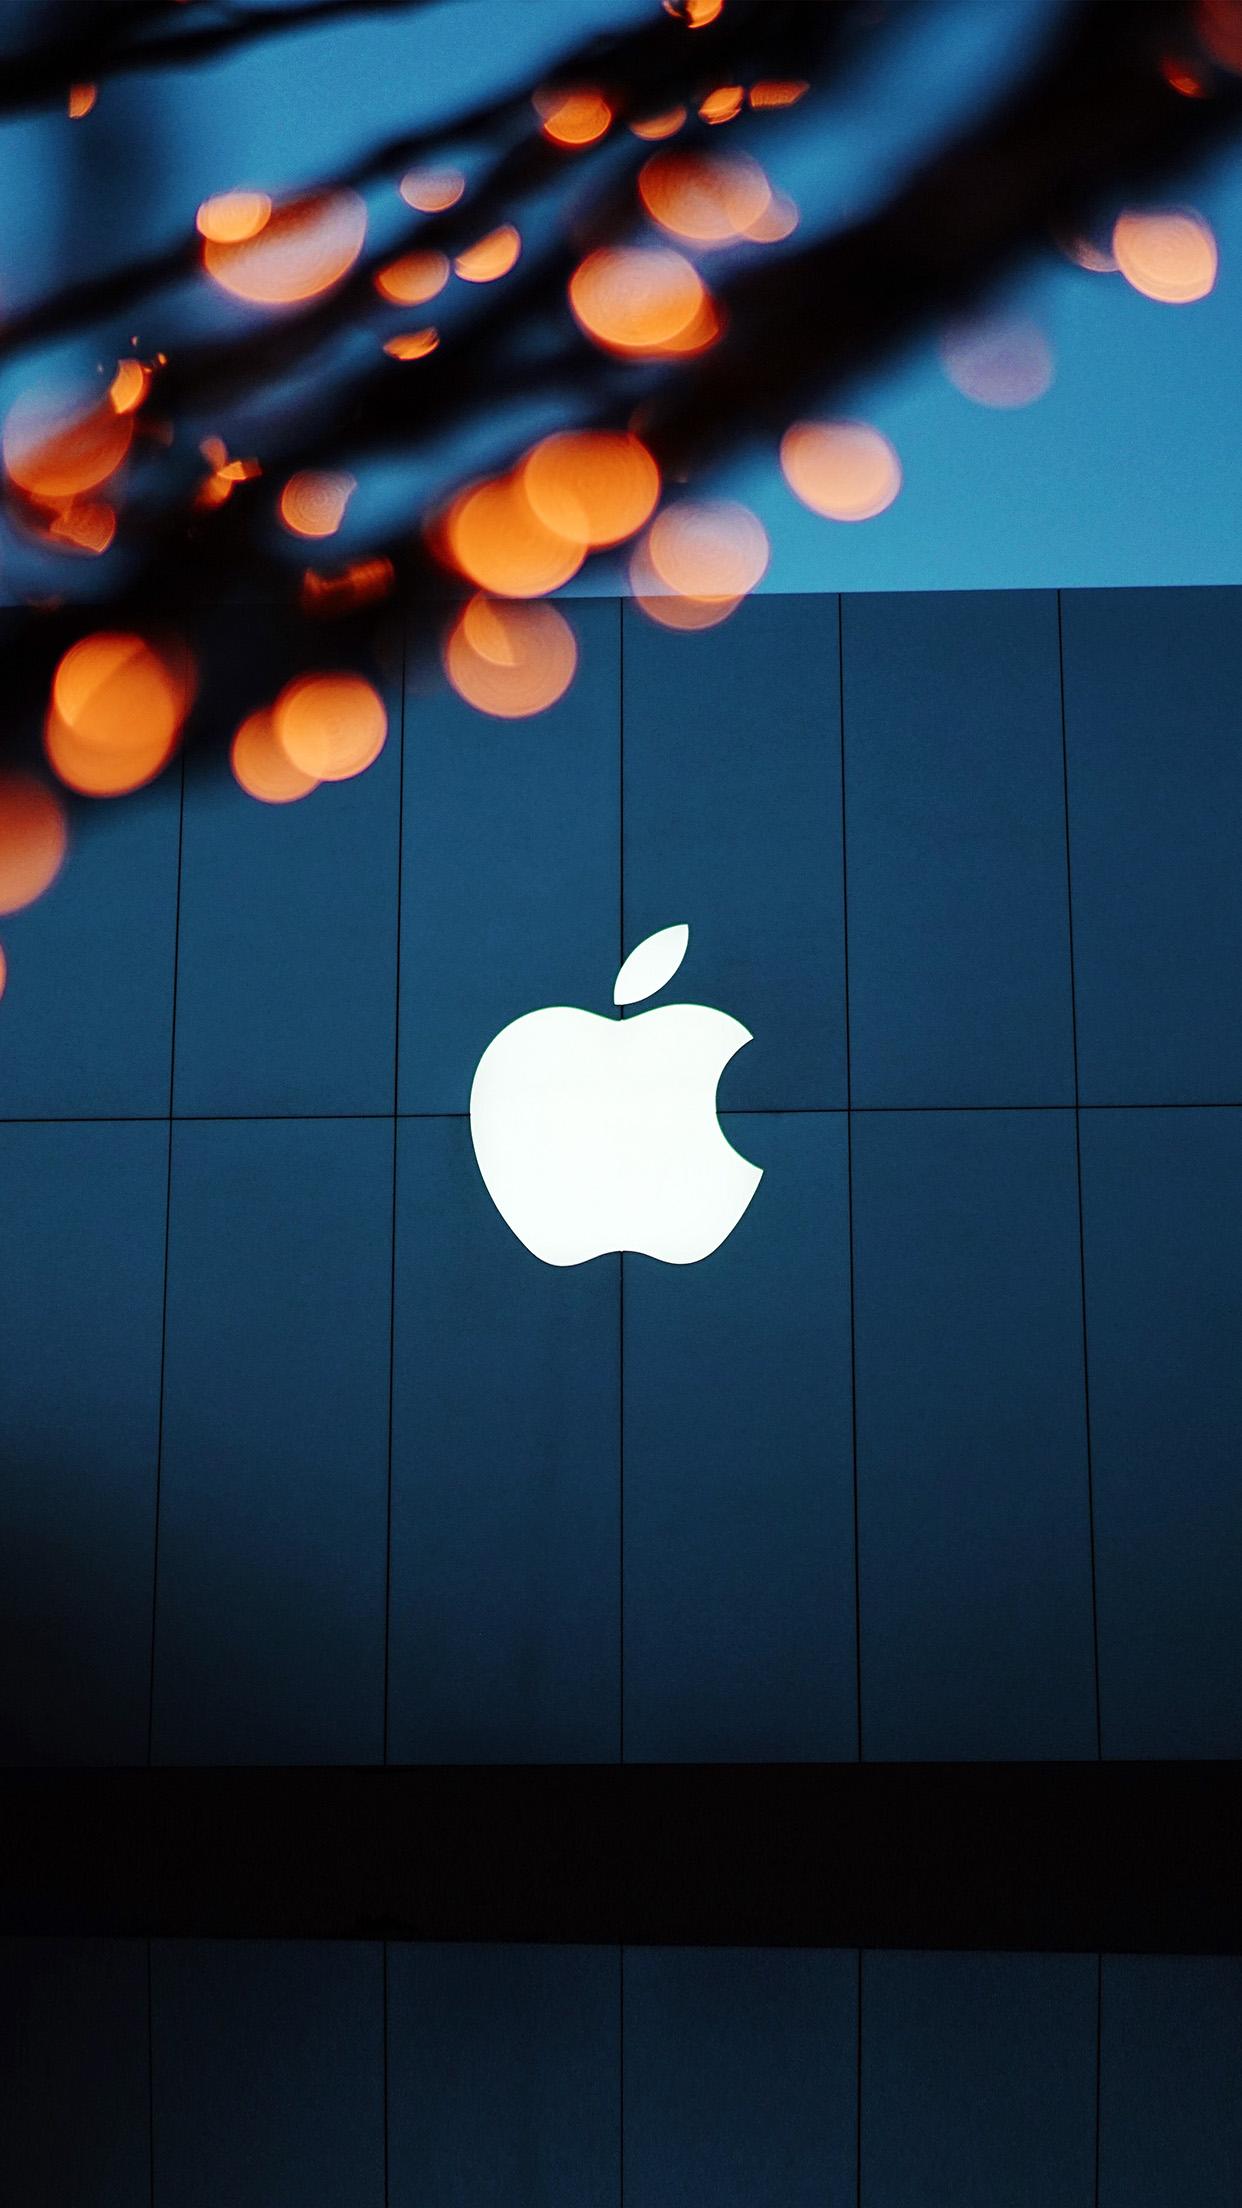 iPhone X wallpaper. apple logo blue